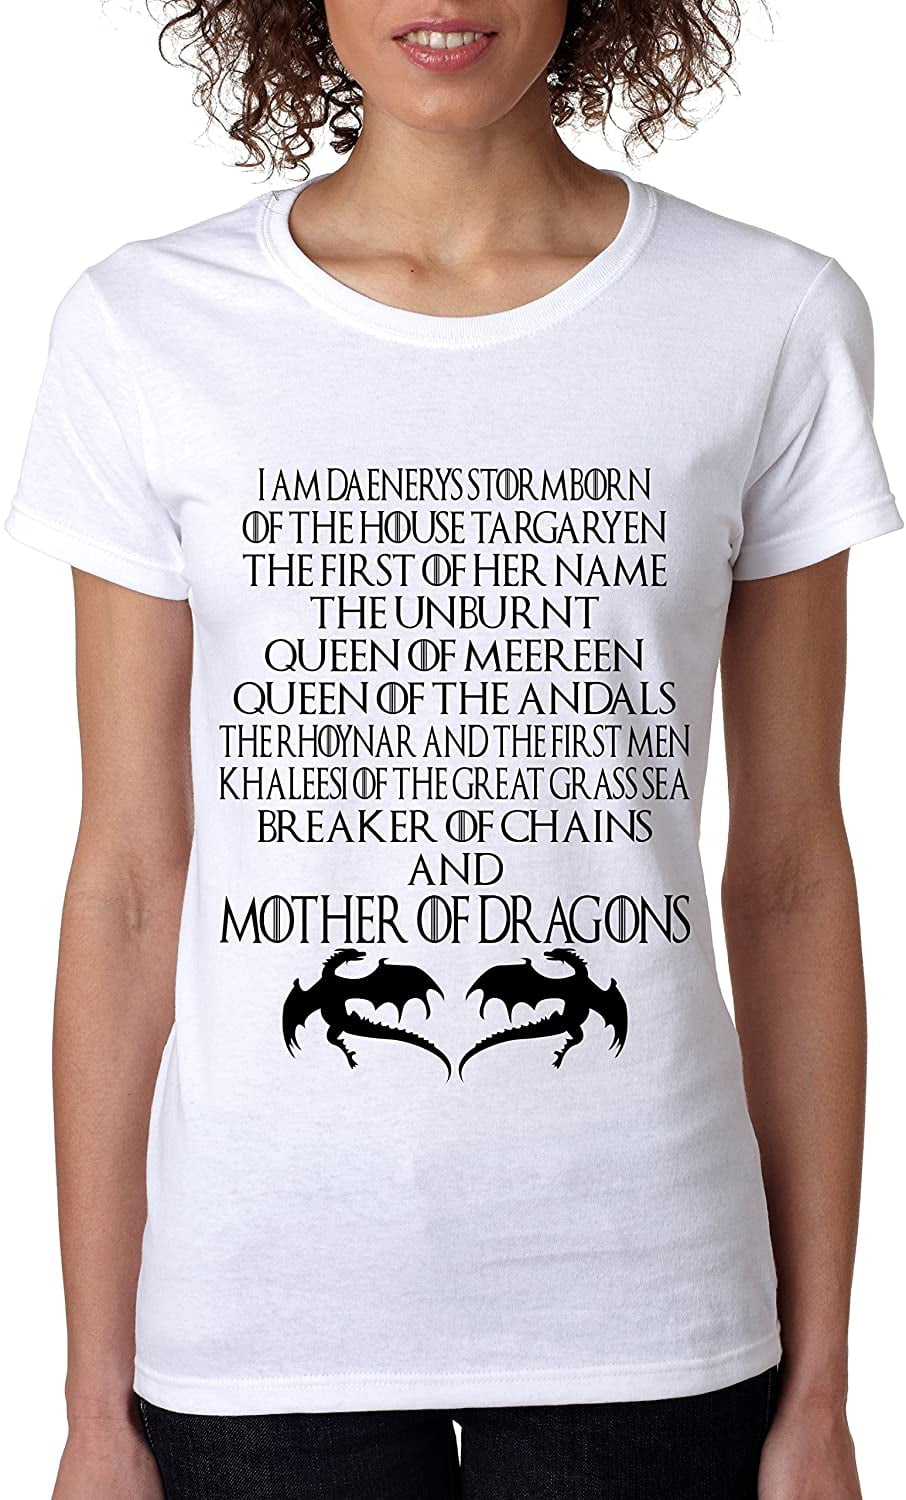 Allntrends Womens V Shirt Mother Of Dragons